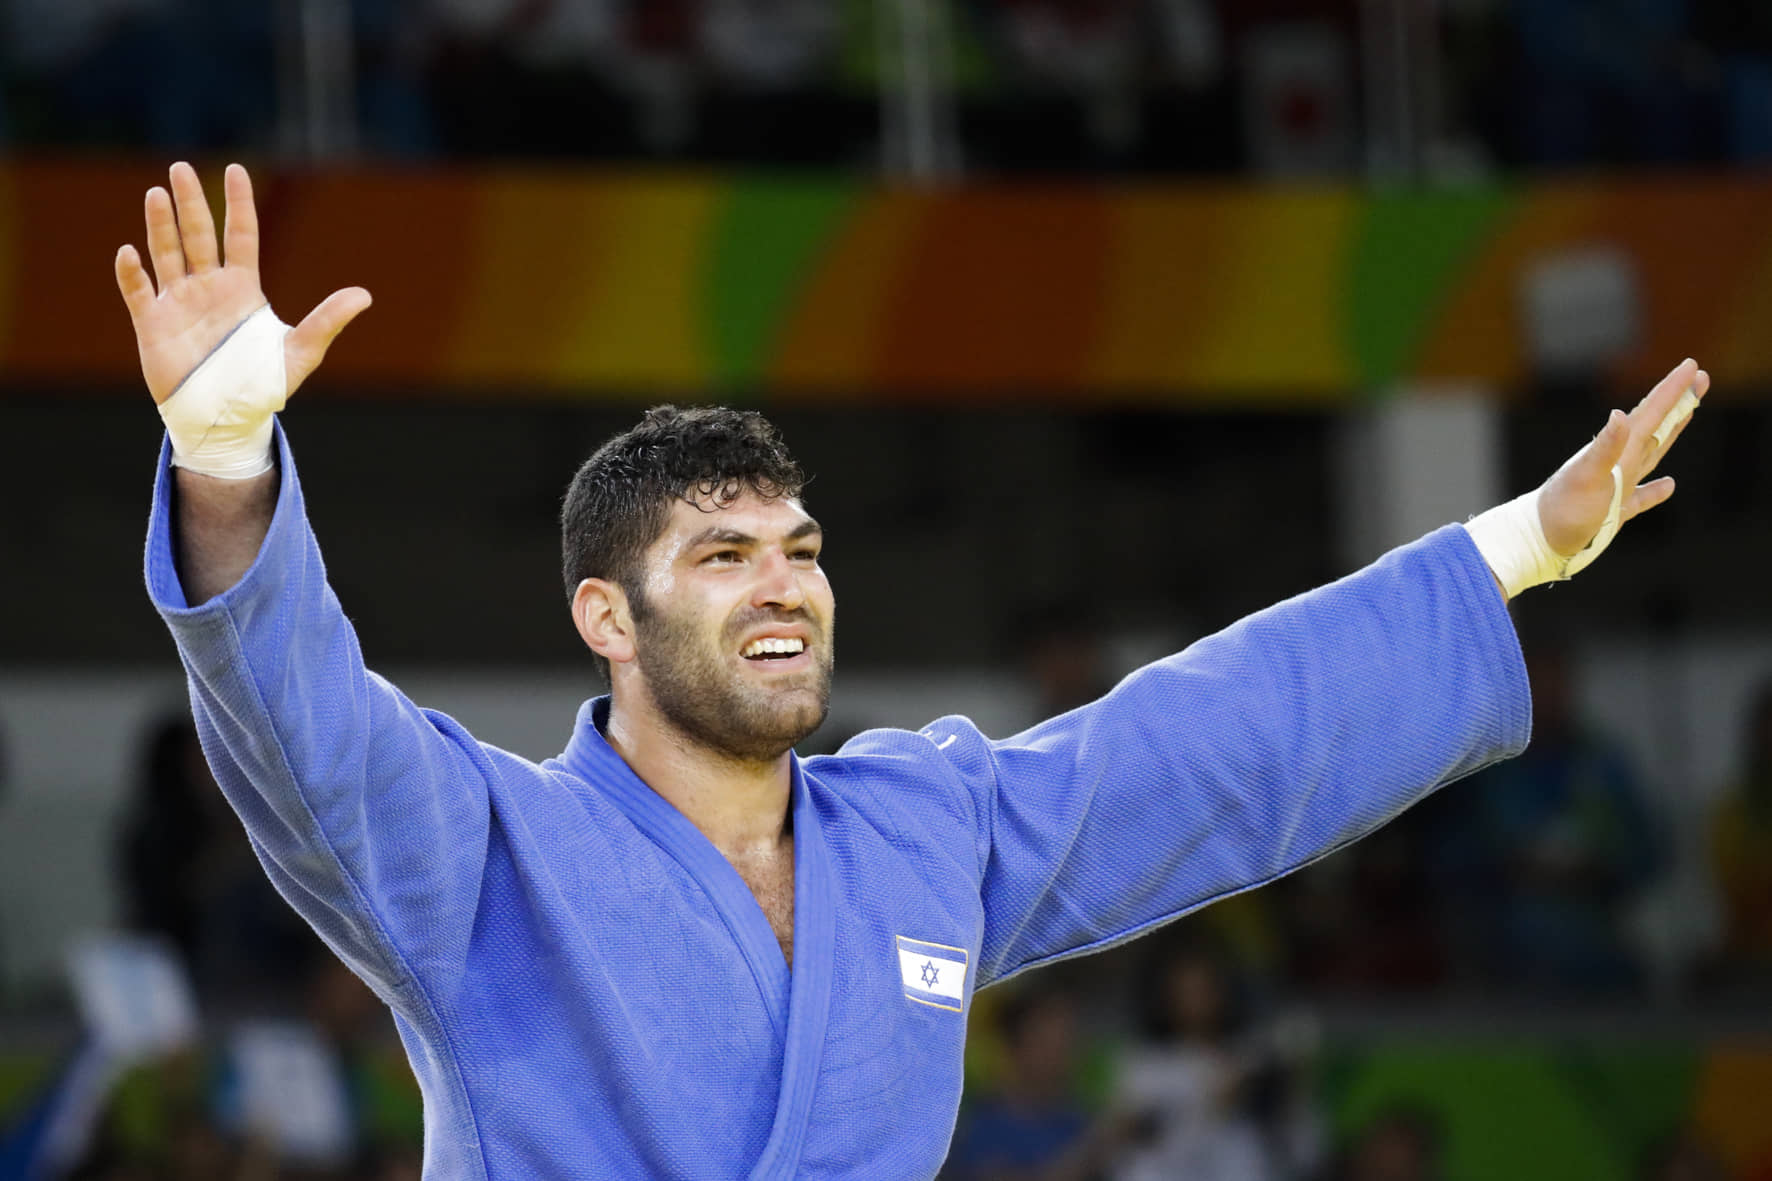 Israeli judoka Or Sasson, double Olympic medalist, announces his retirement